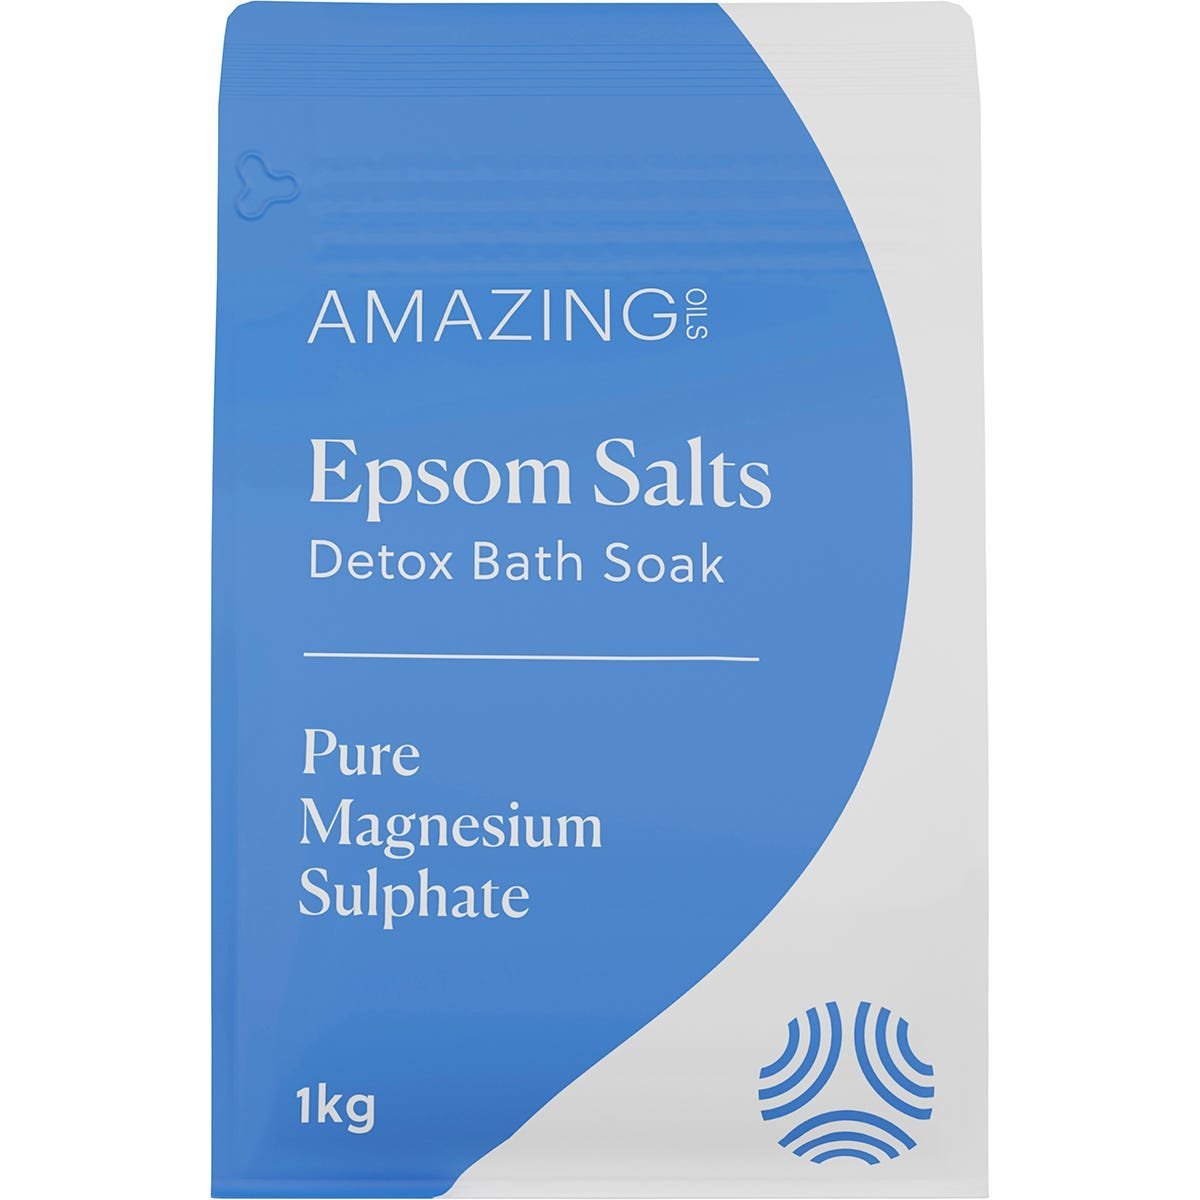 Amazing Oils Epsom Salts Detox Bath Soak Pure Magnesium Sulphate 1kg - Dr Earth - Bath & Body, Magnesium & Salts, Detox